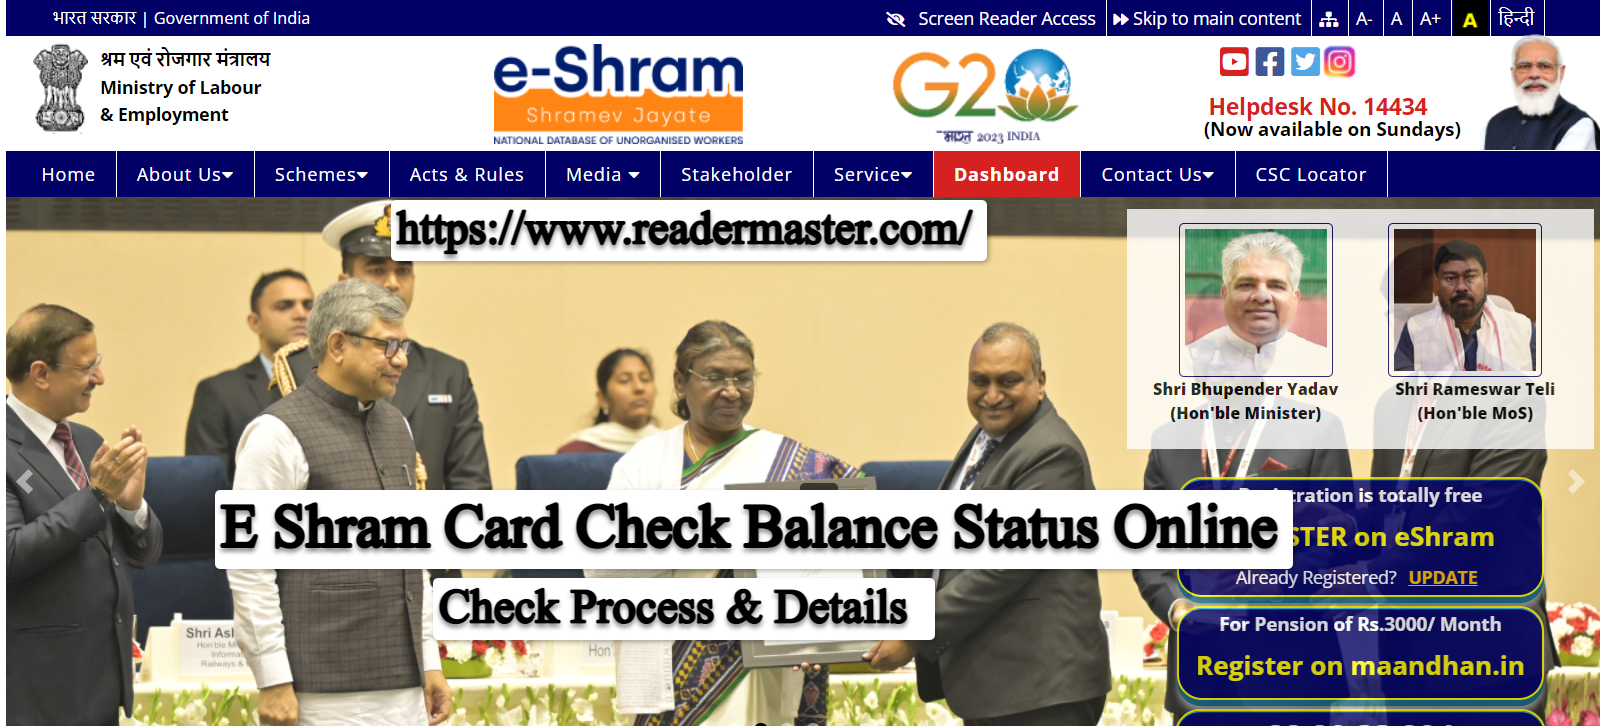 E Shram Card Check Balance Status Online @eshram.gov.in, Login/ Registration